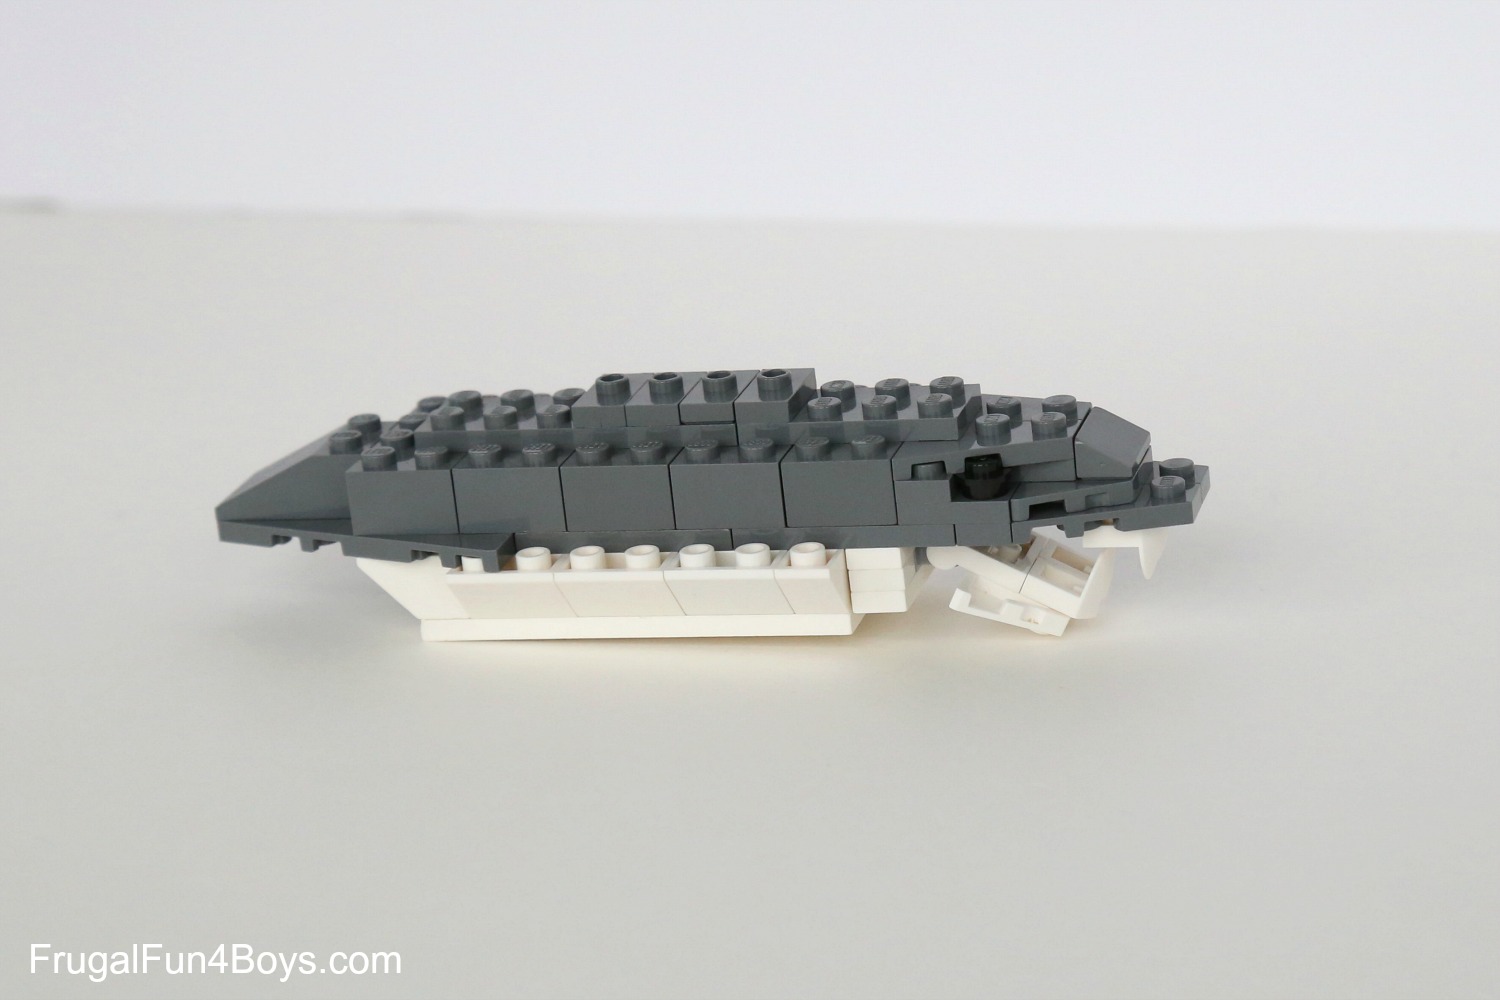 LEGO Shark Building Instructions